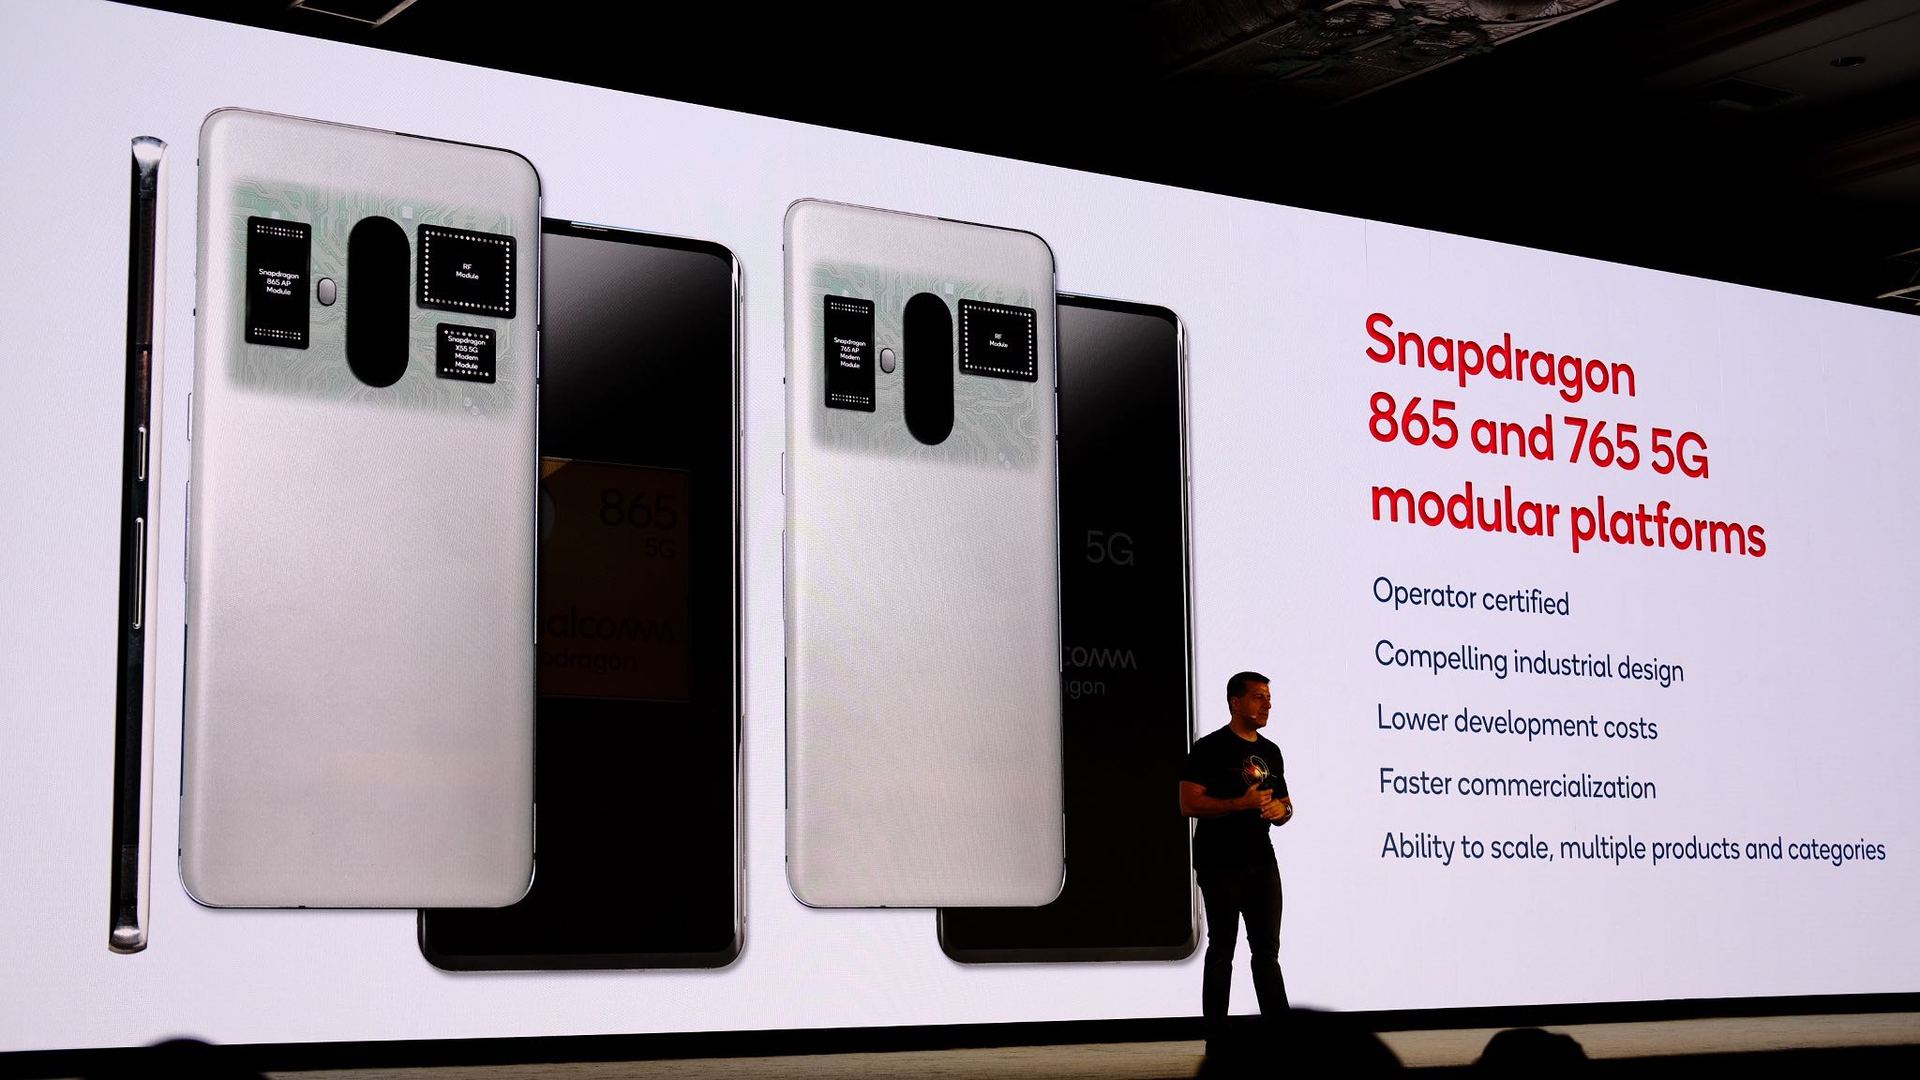 Snapdragon 865 and 765 5G modular platforms slide